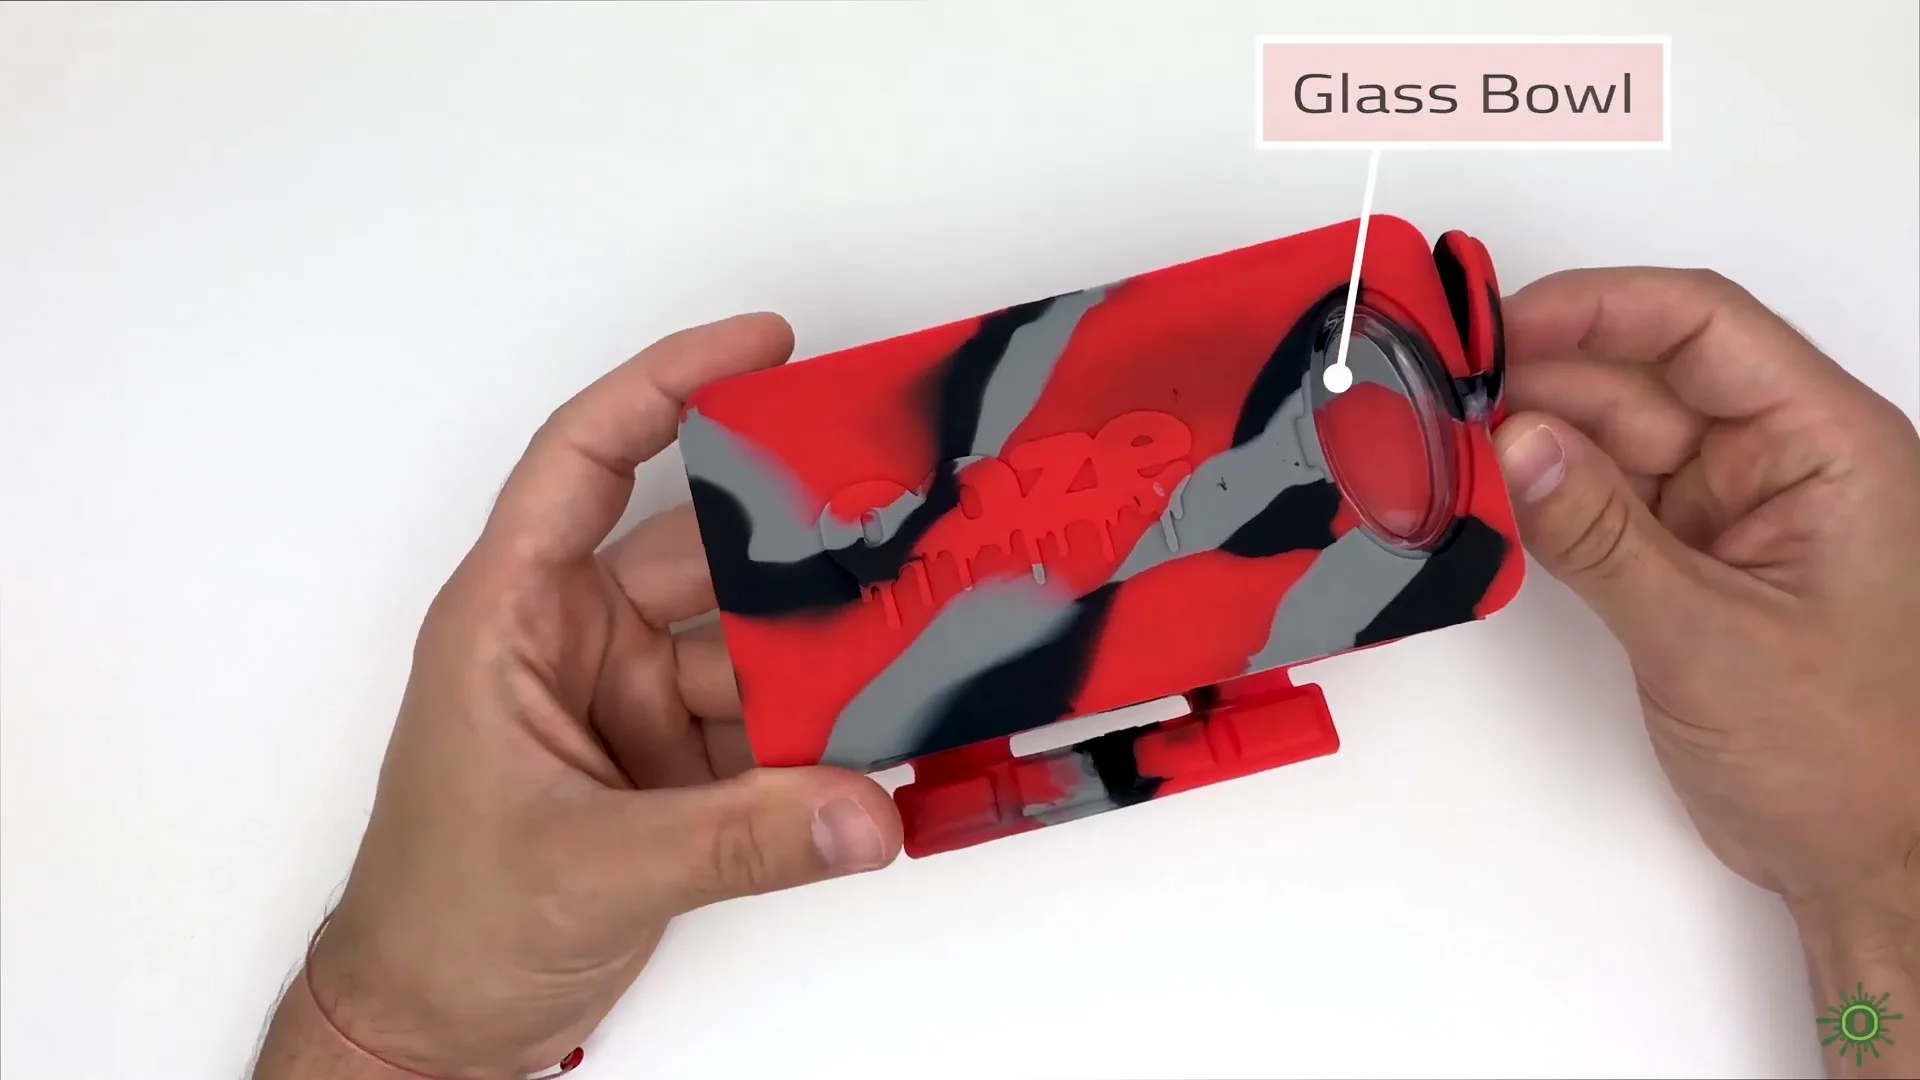 Twisty Glass Blunt by 7 Pipe on Vimeo